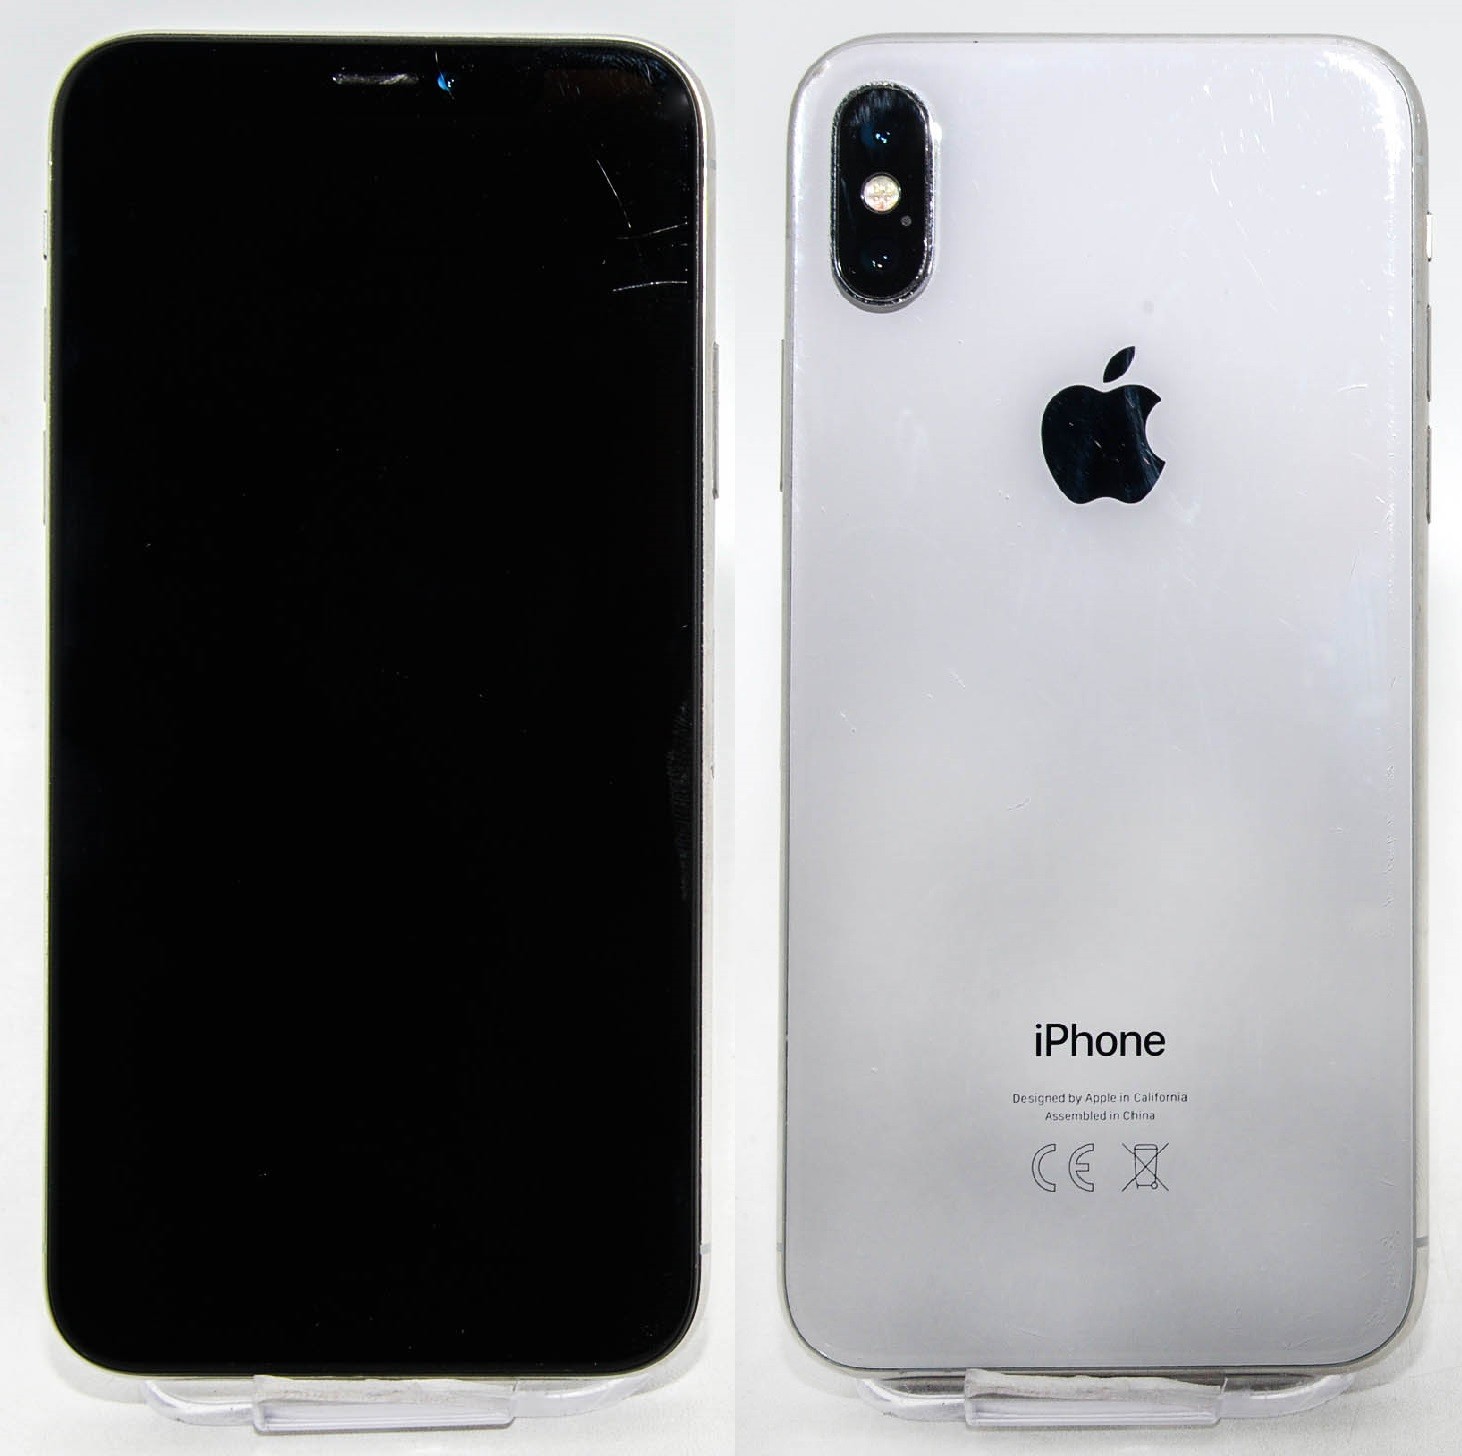 iPhone X Blanco 64GB - Movil Segundamano 